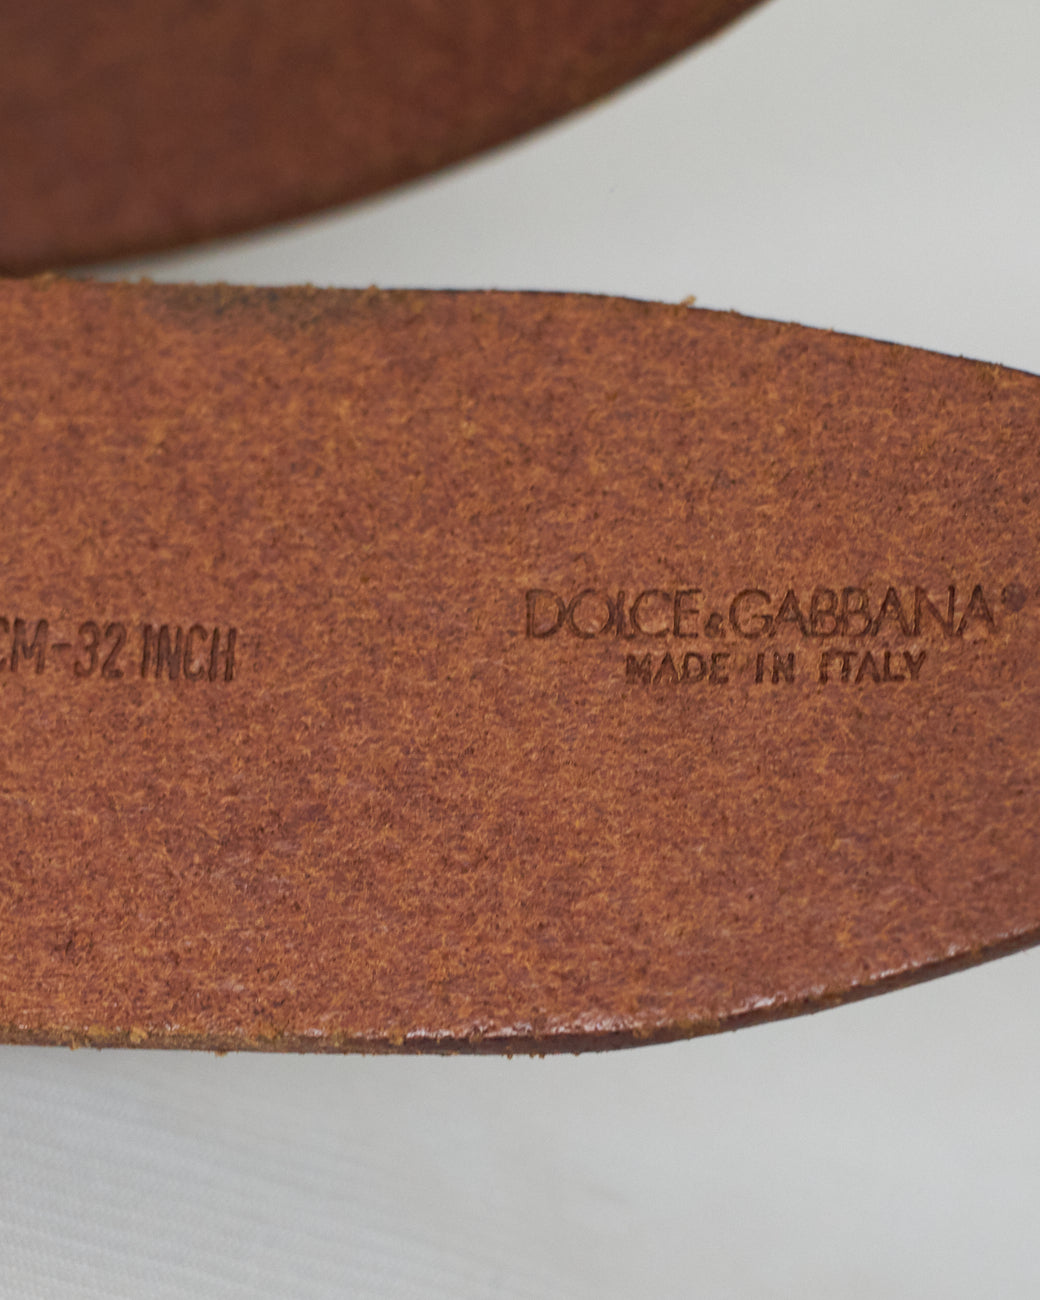 Cinto Dolce&amp;Gabbana Marrom Glitter - tamanho 36